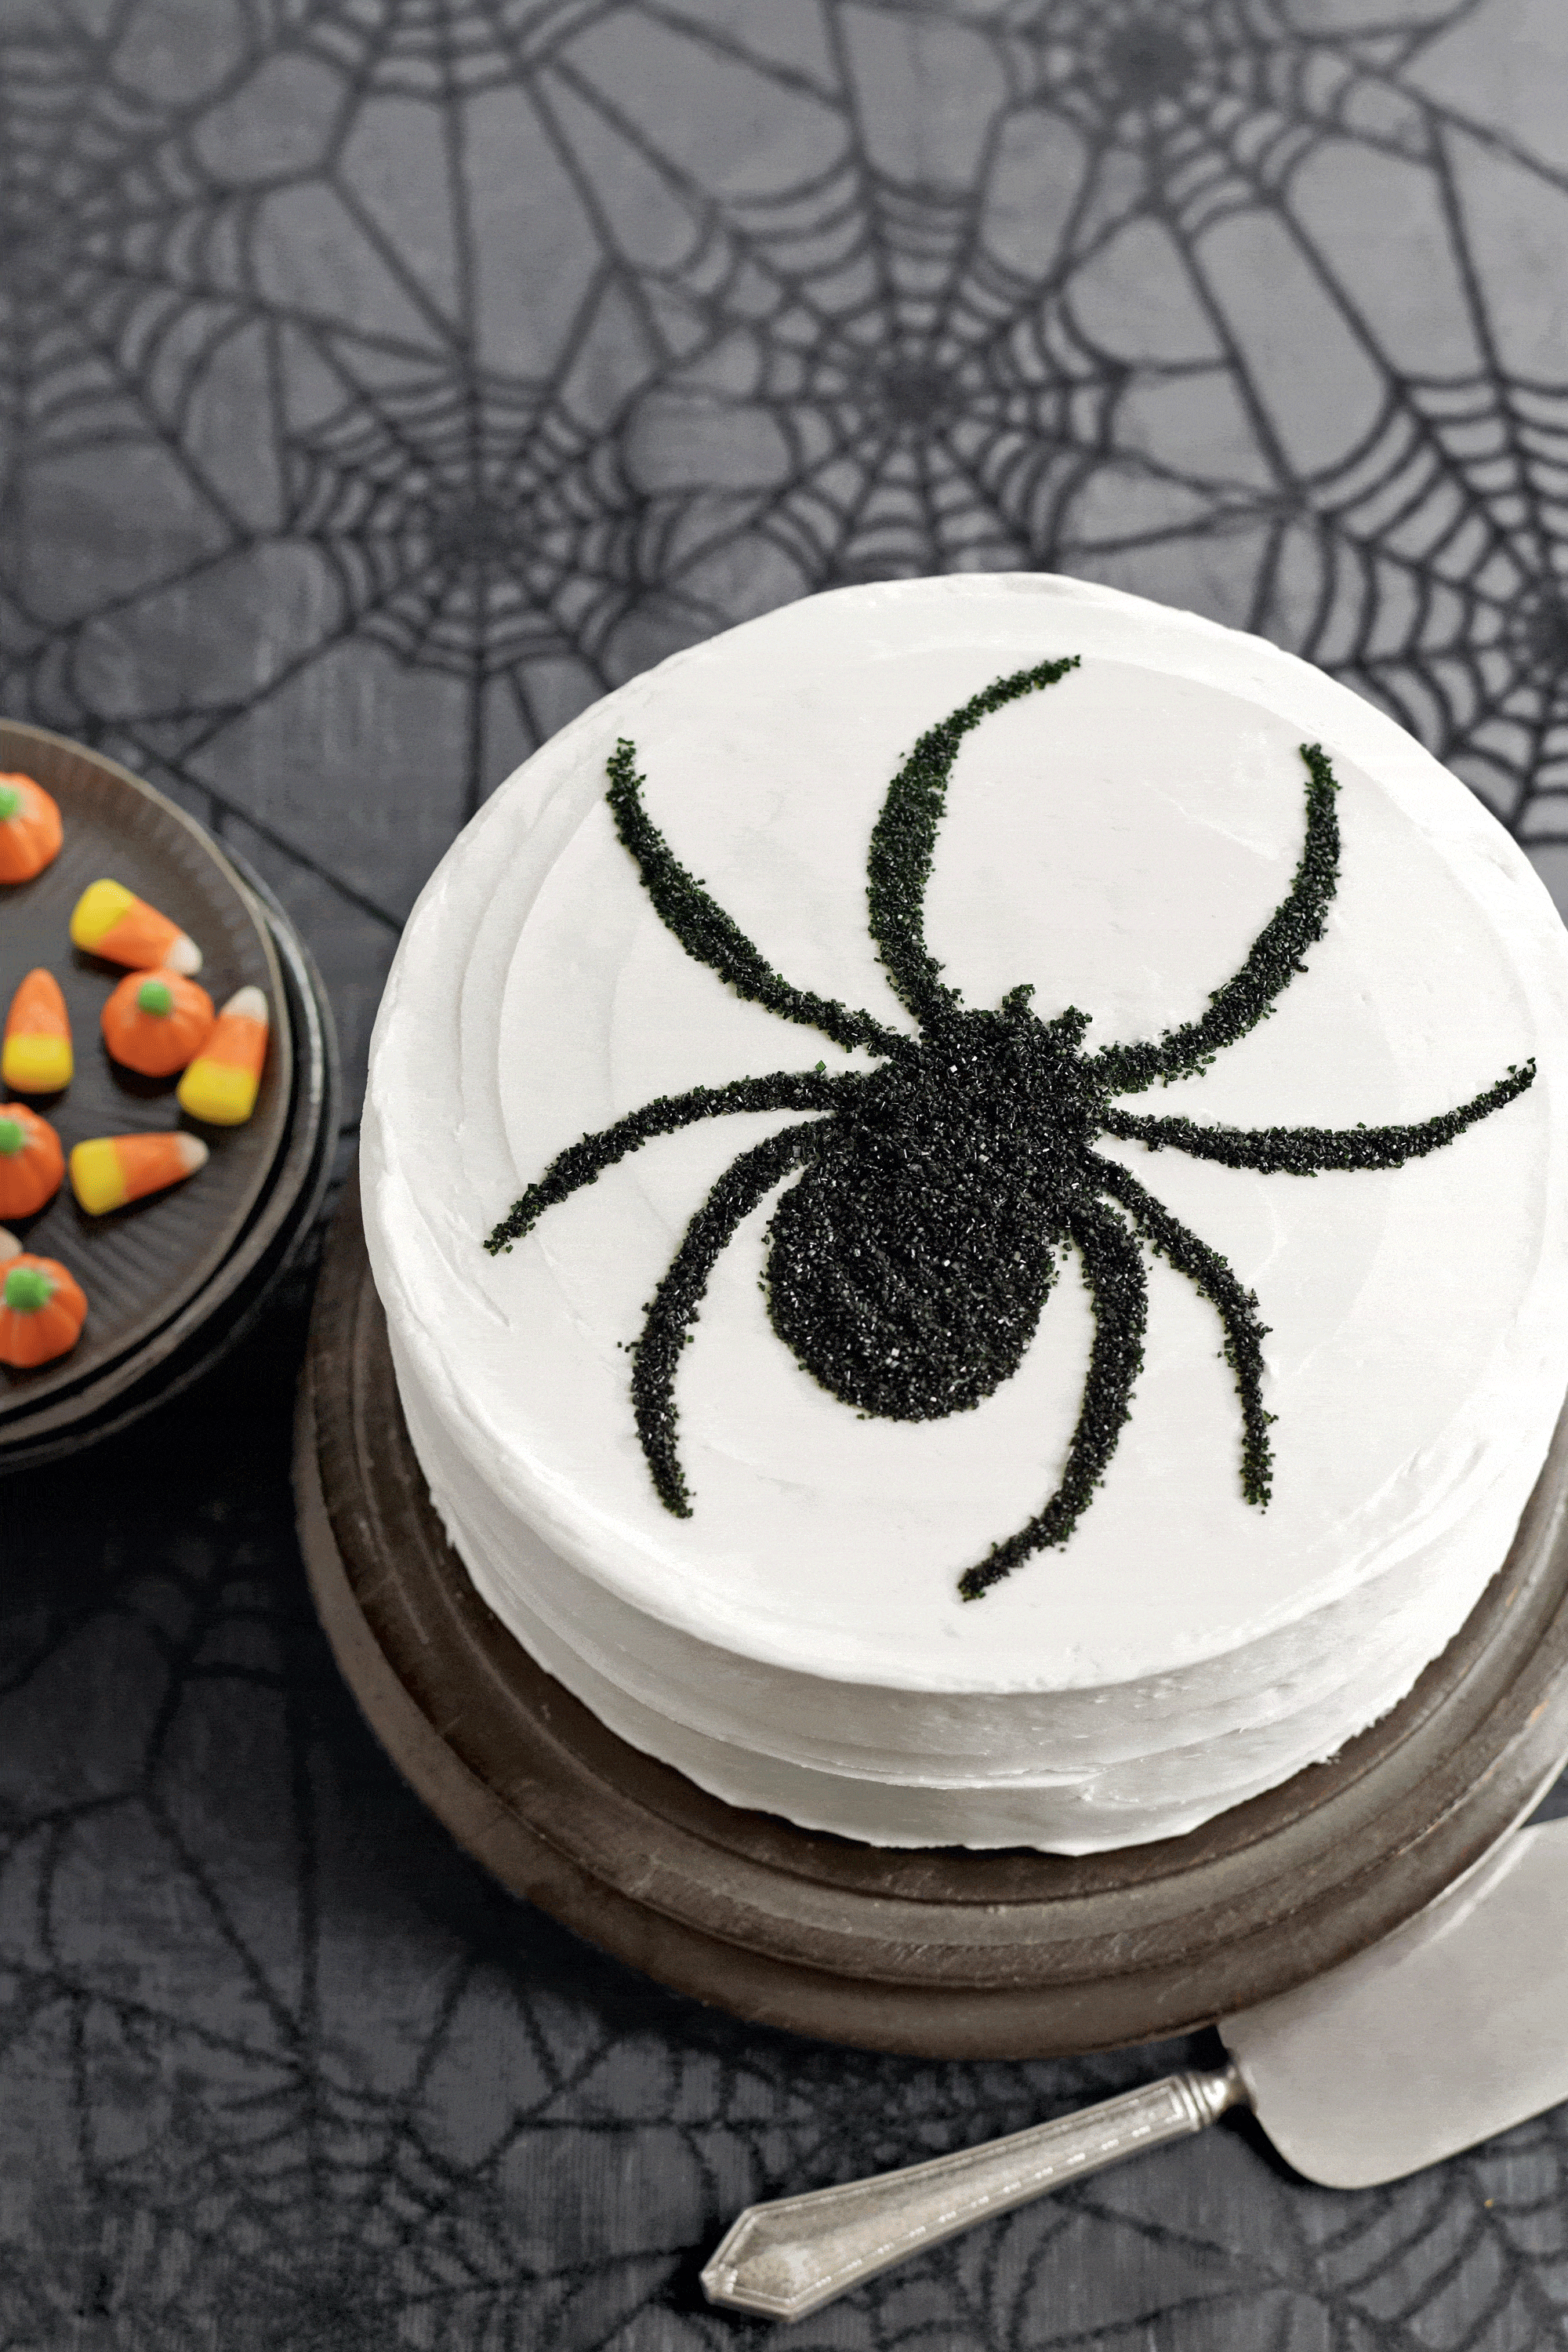 30 Best Halloween Cake Recipes - Spooky & Fun Halloween Cake Ideas